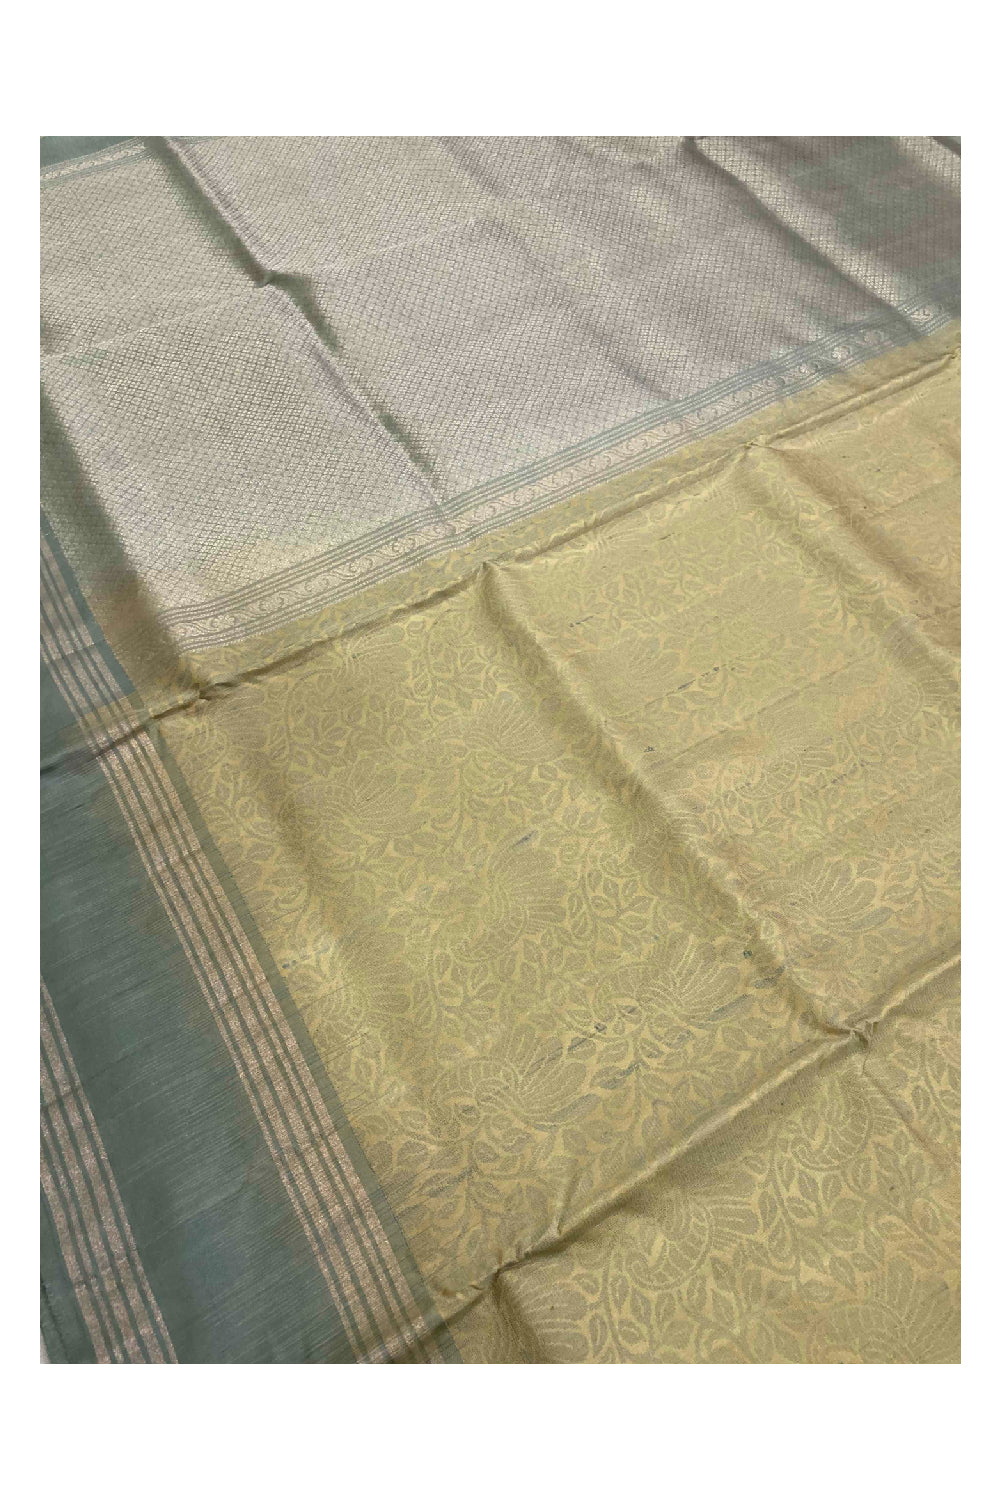 Southloom Handloom Pure Silk Kanchipuram Saree in Light Green Floral Motifs